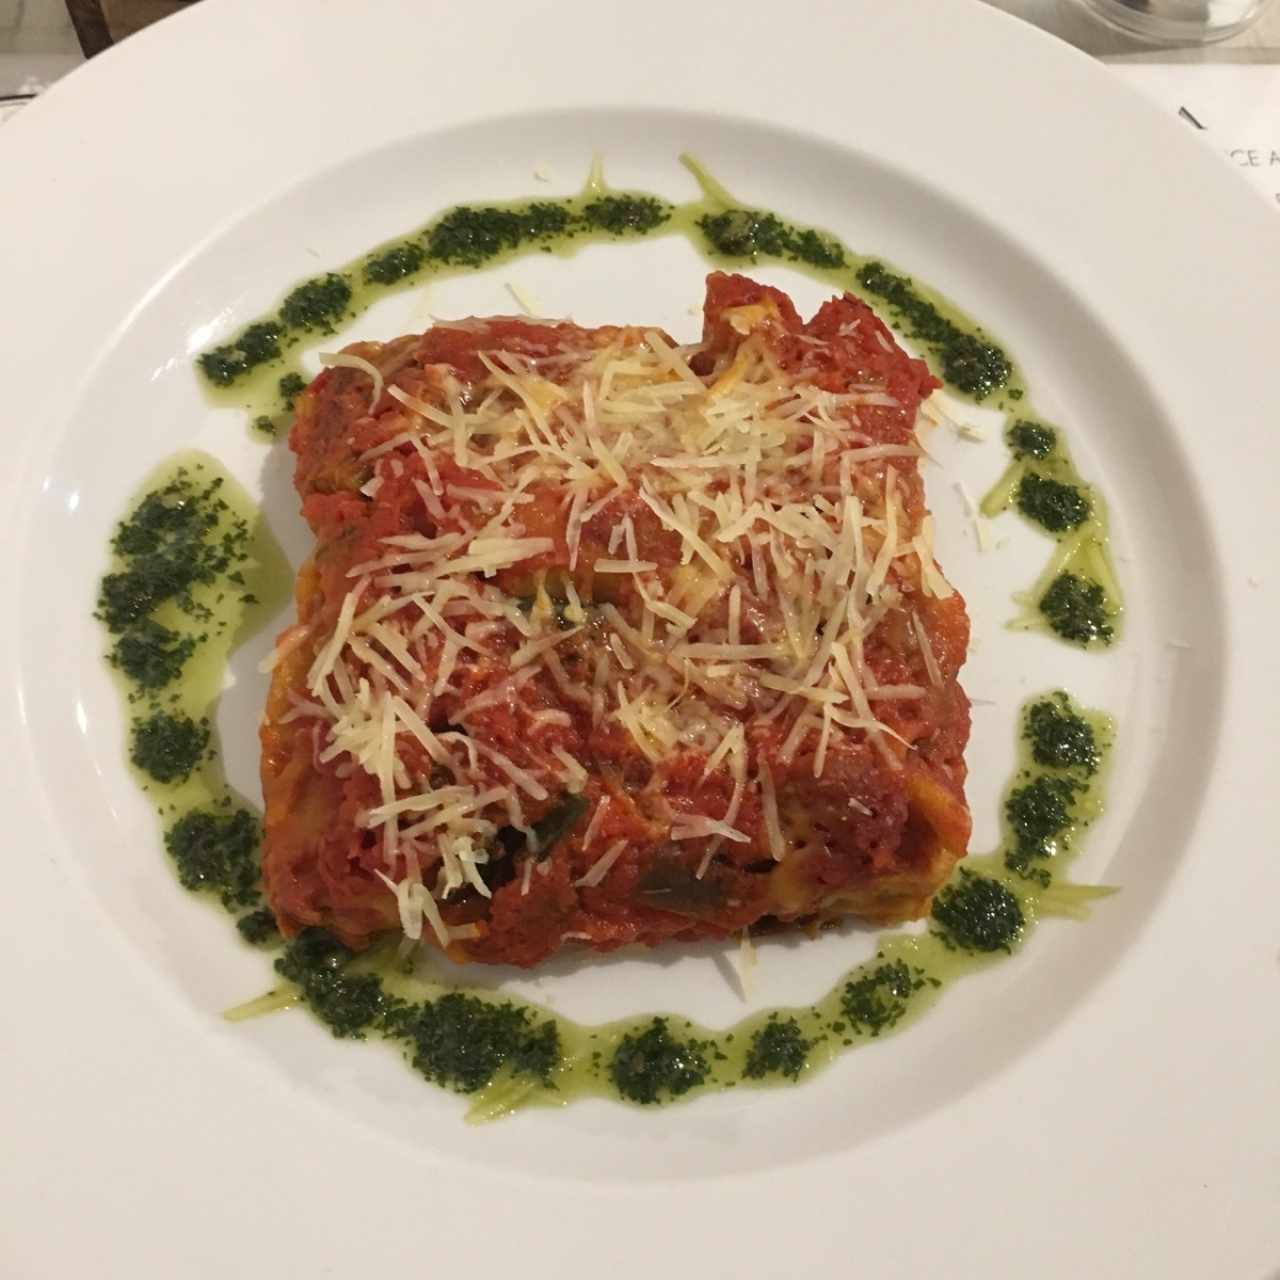 Lasagna Vegetariana